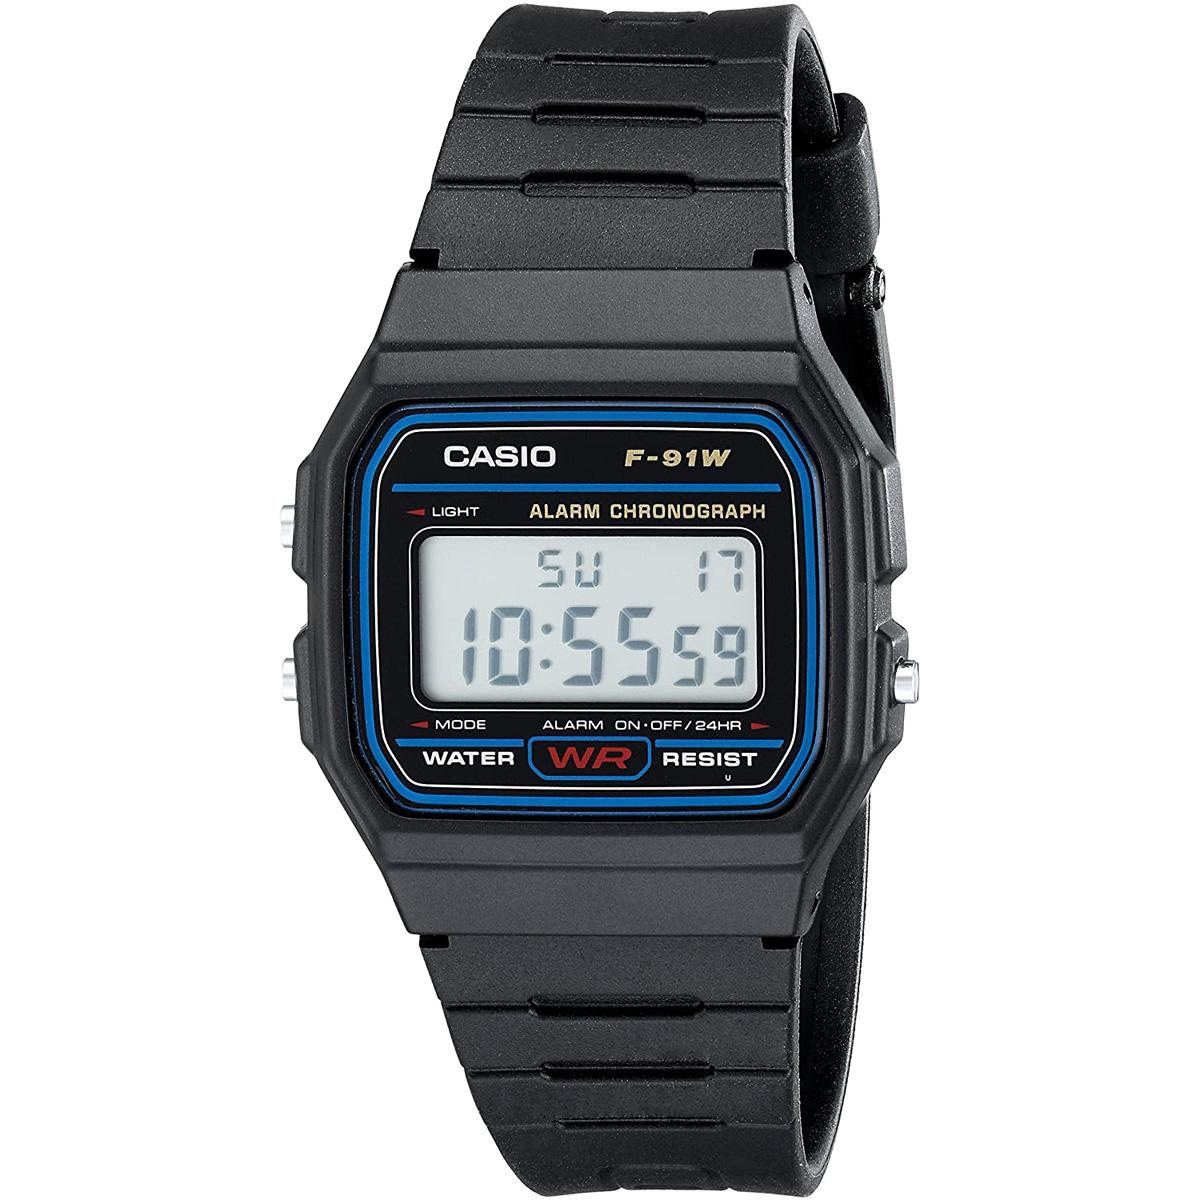 Casio F91W-1 Classic Resin Strap Digital Sport Watch for $3